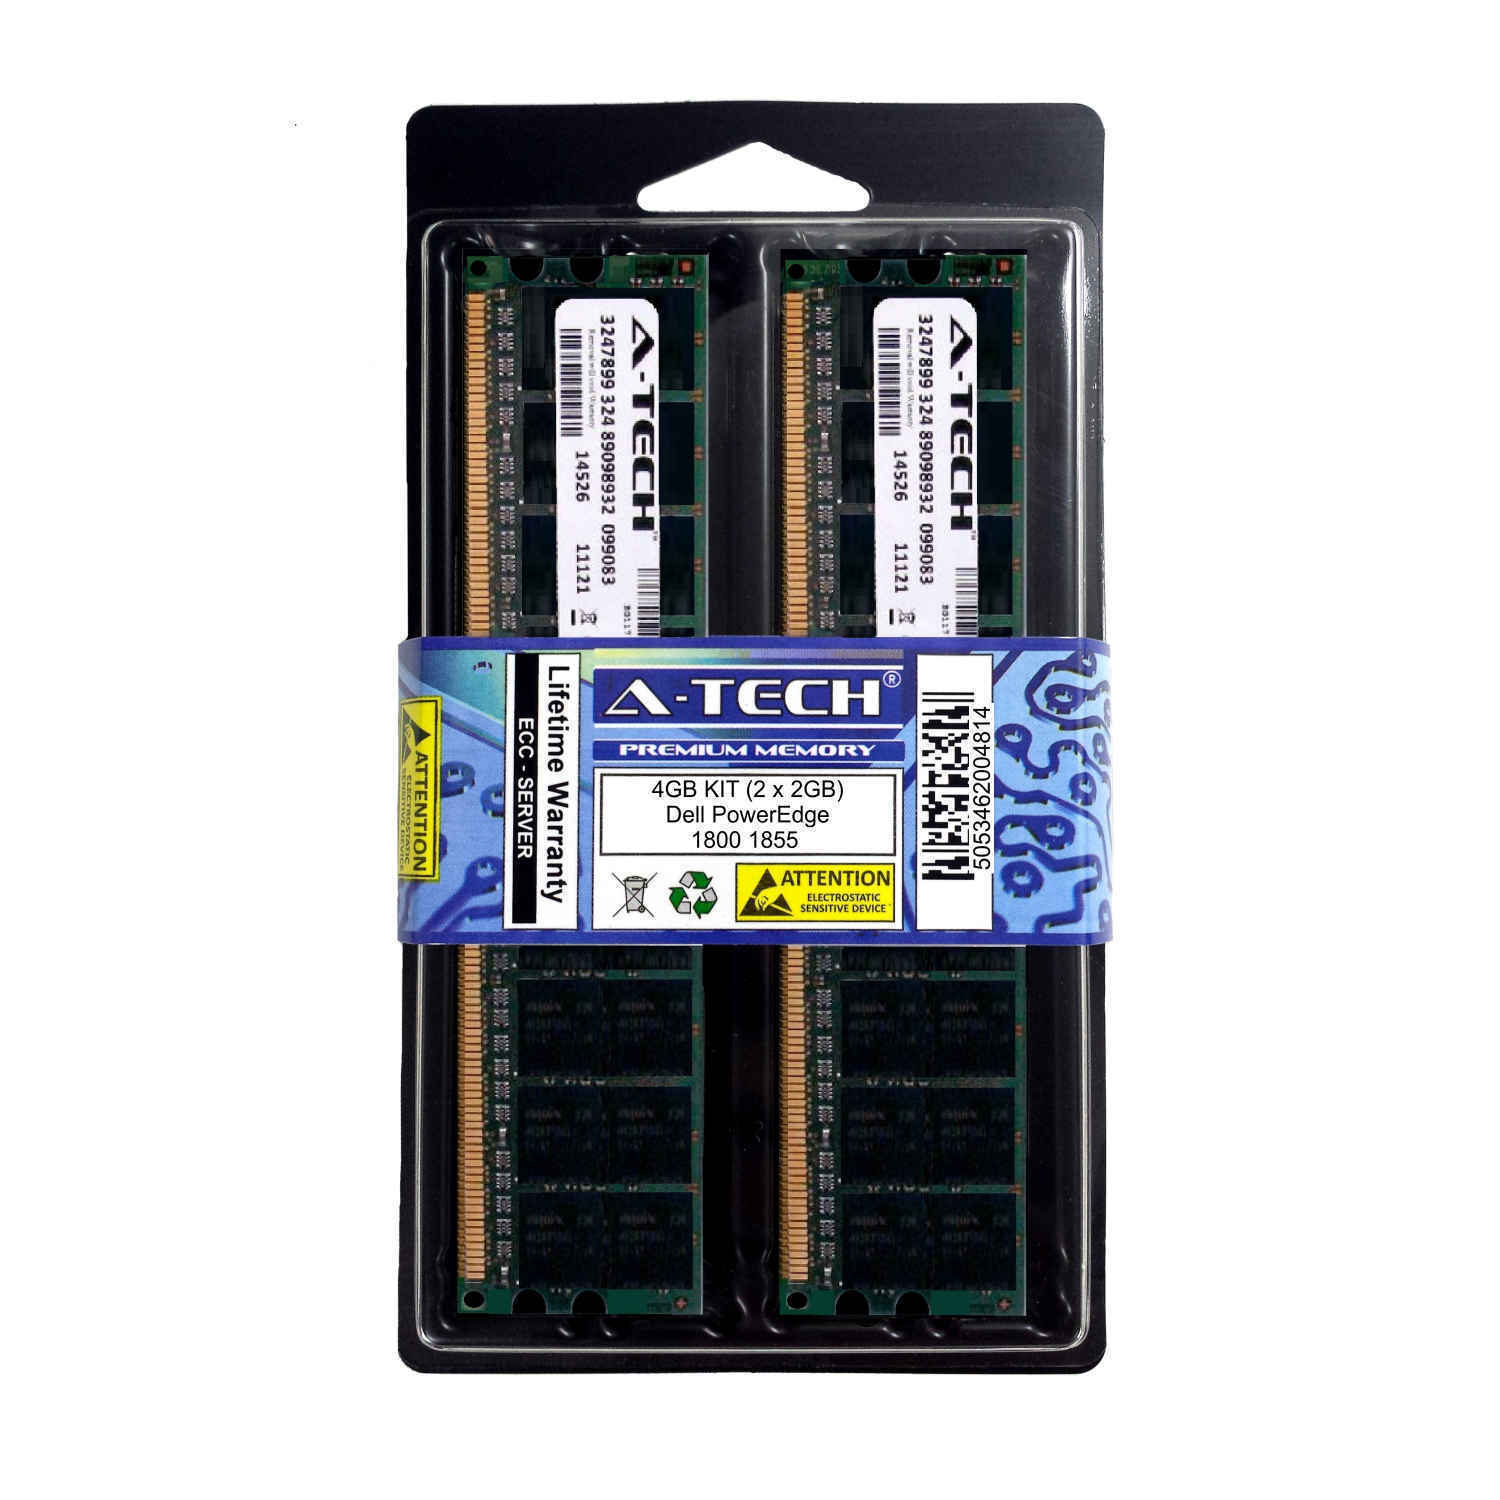 Primary image for 4Gb Kit 2 X 2Gb Dell Poweredge 1800 1855 2800 2850 2970 Sc1425 Server Memory Ram